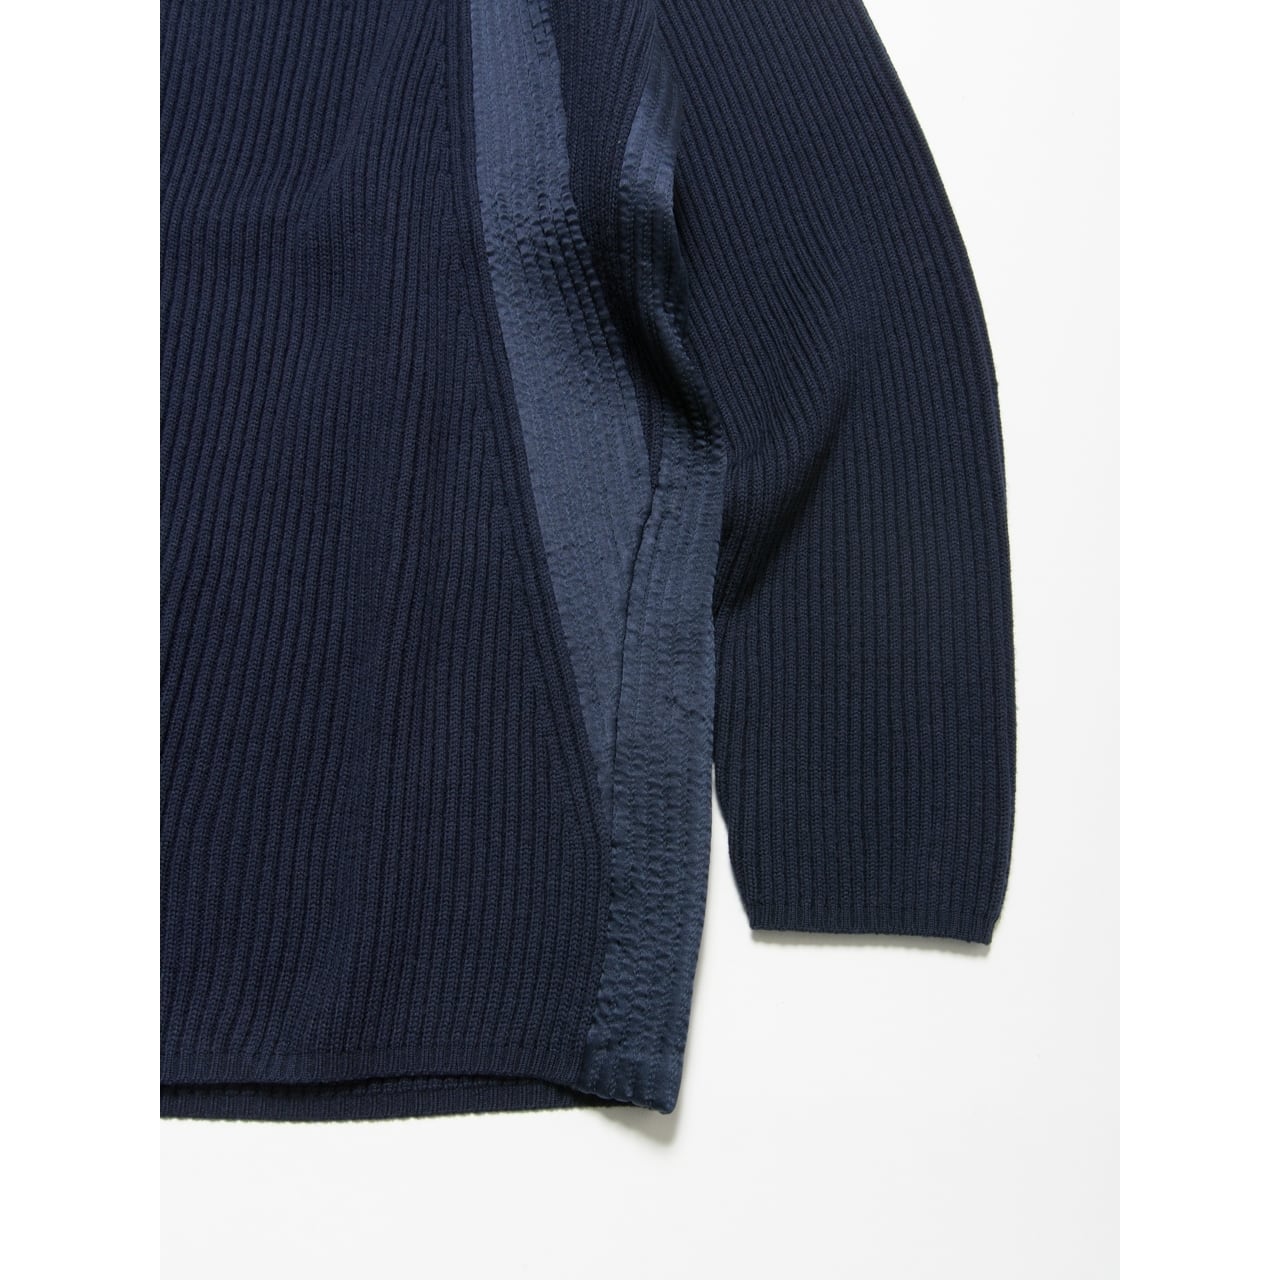 GIANFRANCO FERRE】Made in Italy wool-silk high neck rib knit